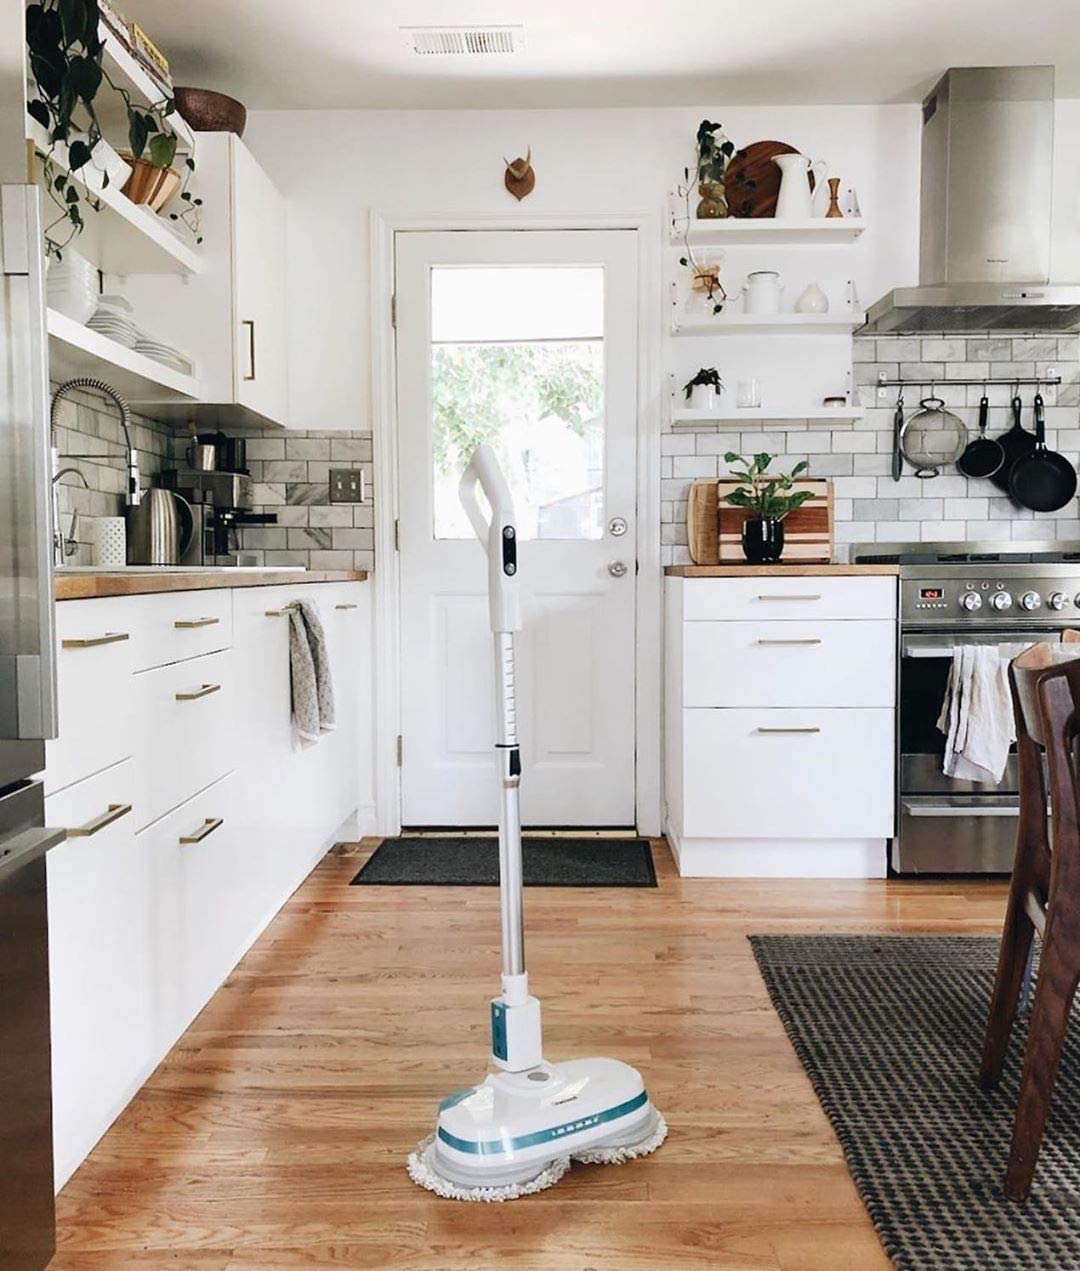 Gladwell Wet Dry Vacuum Cleaner, Cruiser Cordless All in One Wet Dry Vacuum Mop All in One Self-Cleaning,Cordless Mop Hard Floor Cleaner Machine